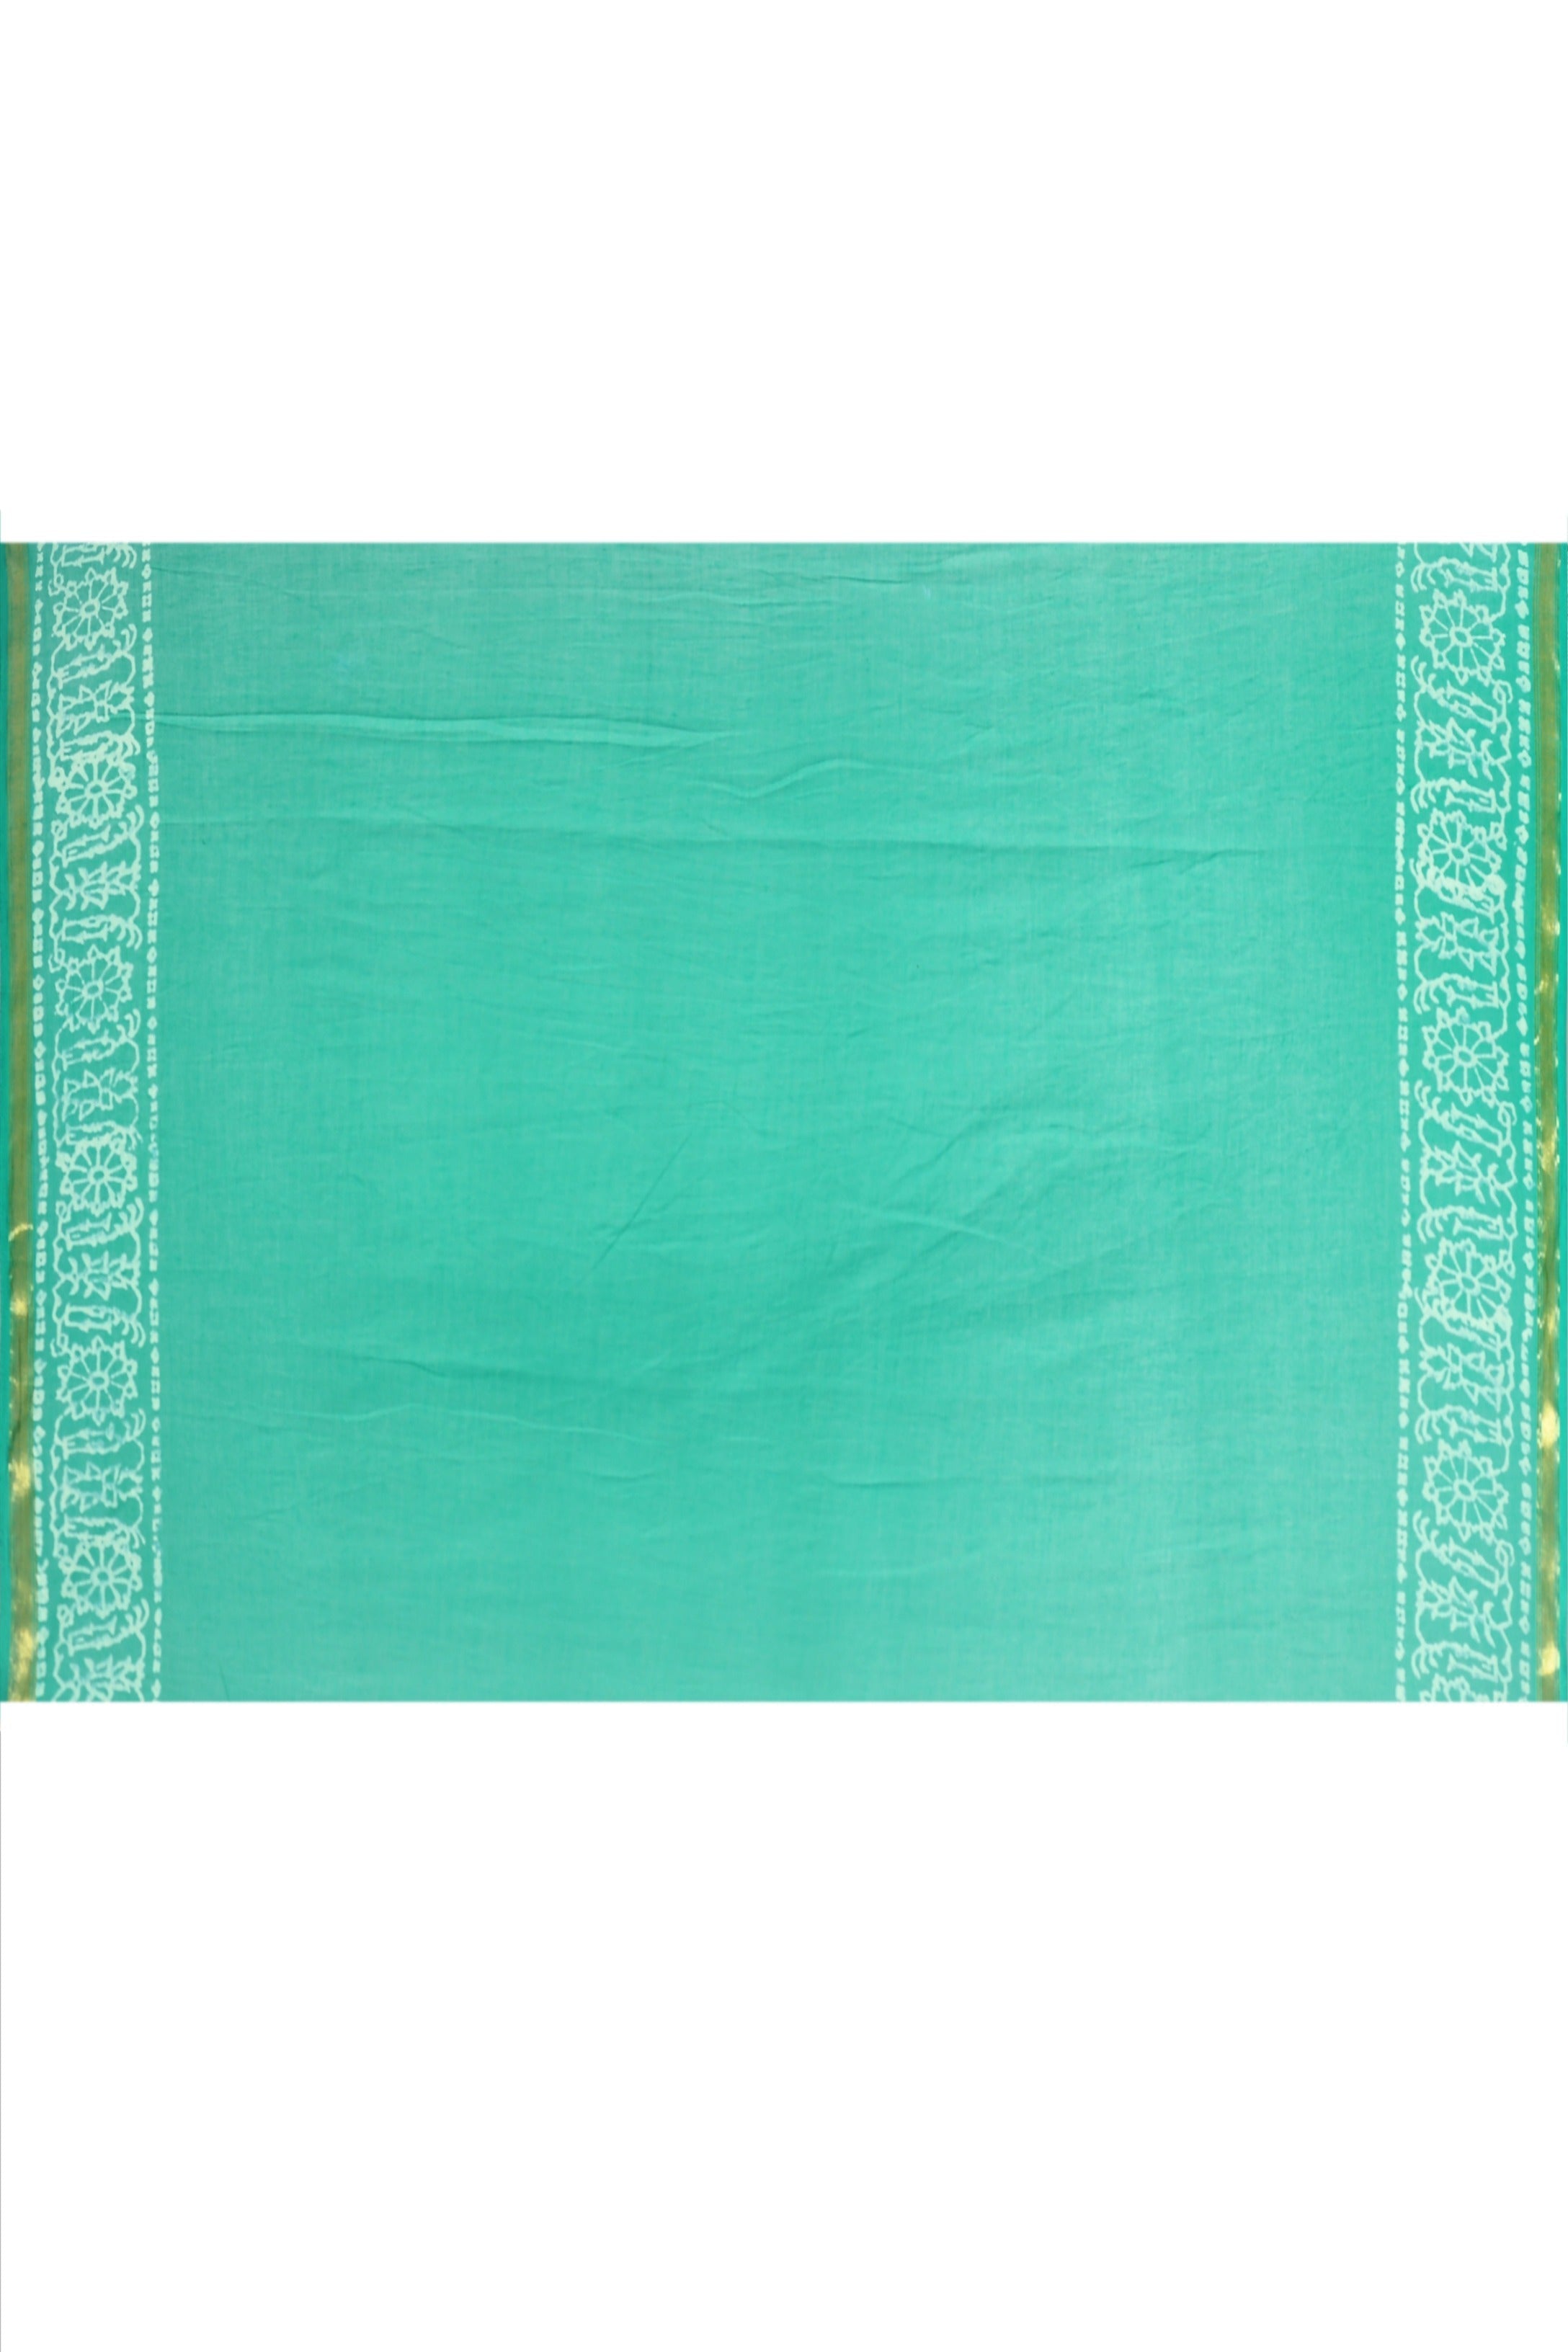 Women's Hand Block Printed Green Cotton Mul Mul Zari Boarder Saree With Blouse - Saras The Label